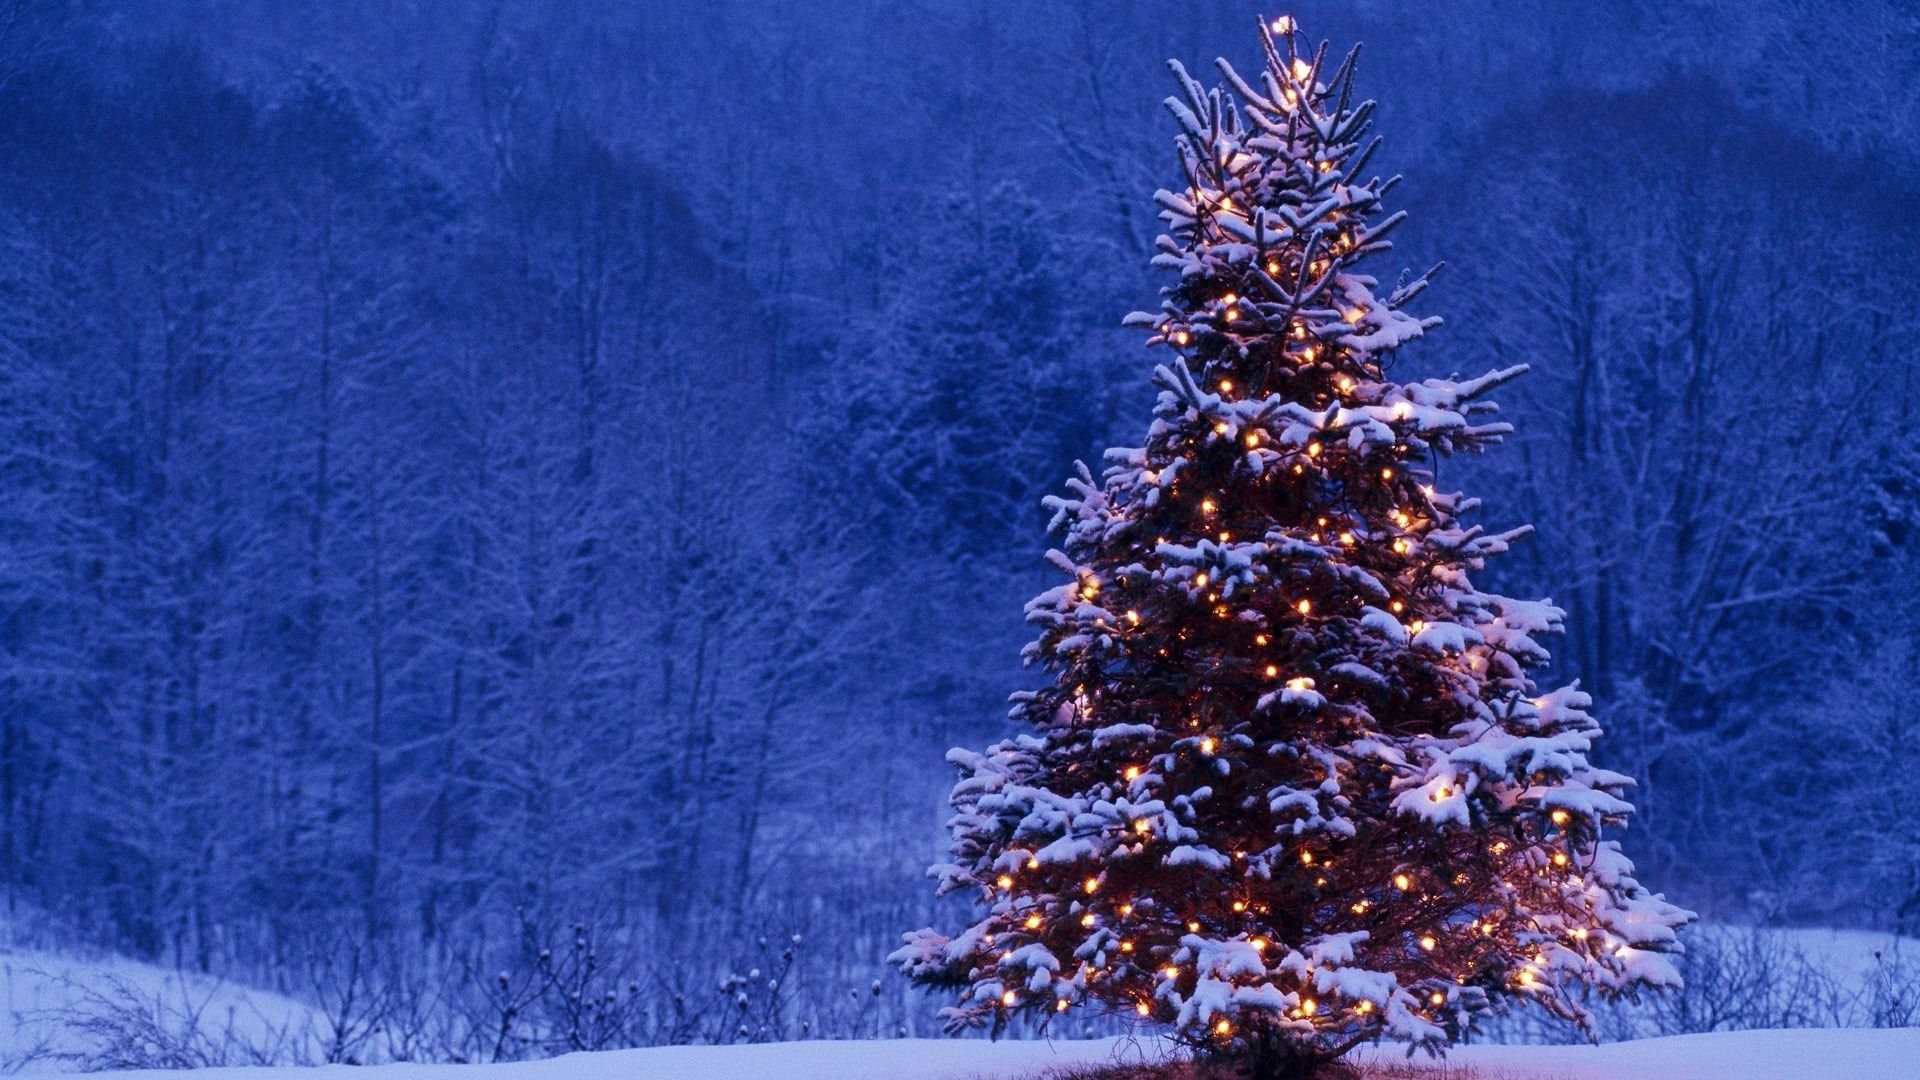 Snow On A Christmas Tree